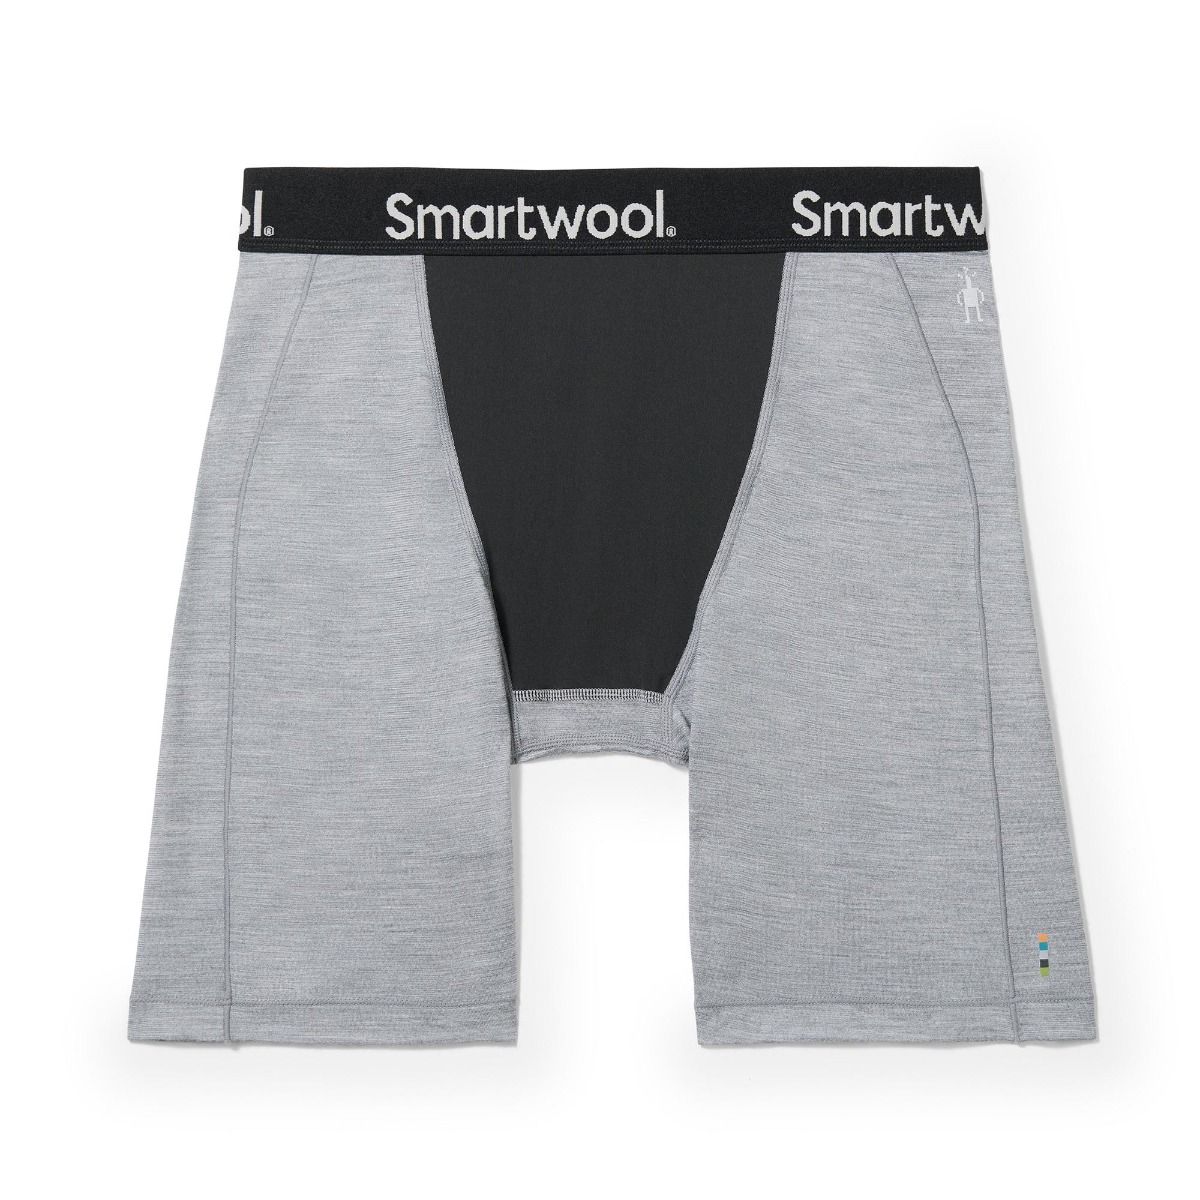 Smartwool Merino 150 Boxer Brief - Merino base layer Men's, Product Review